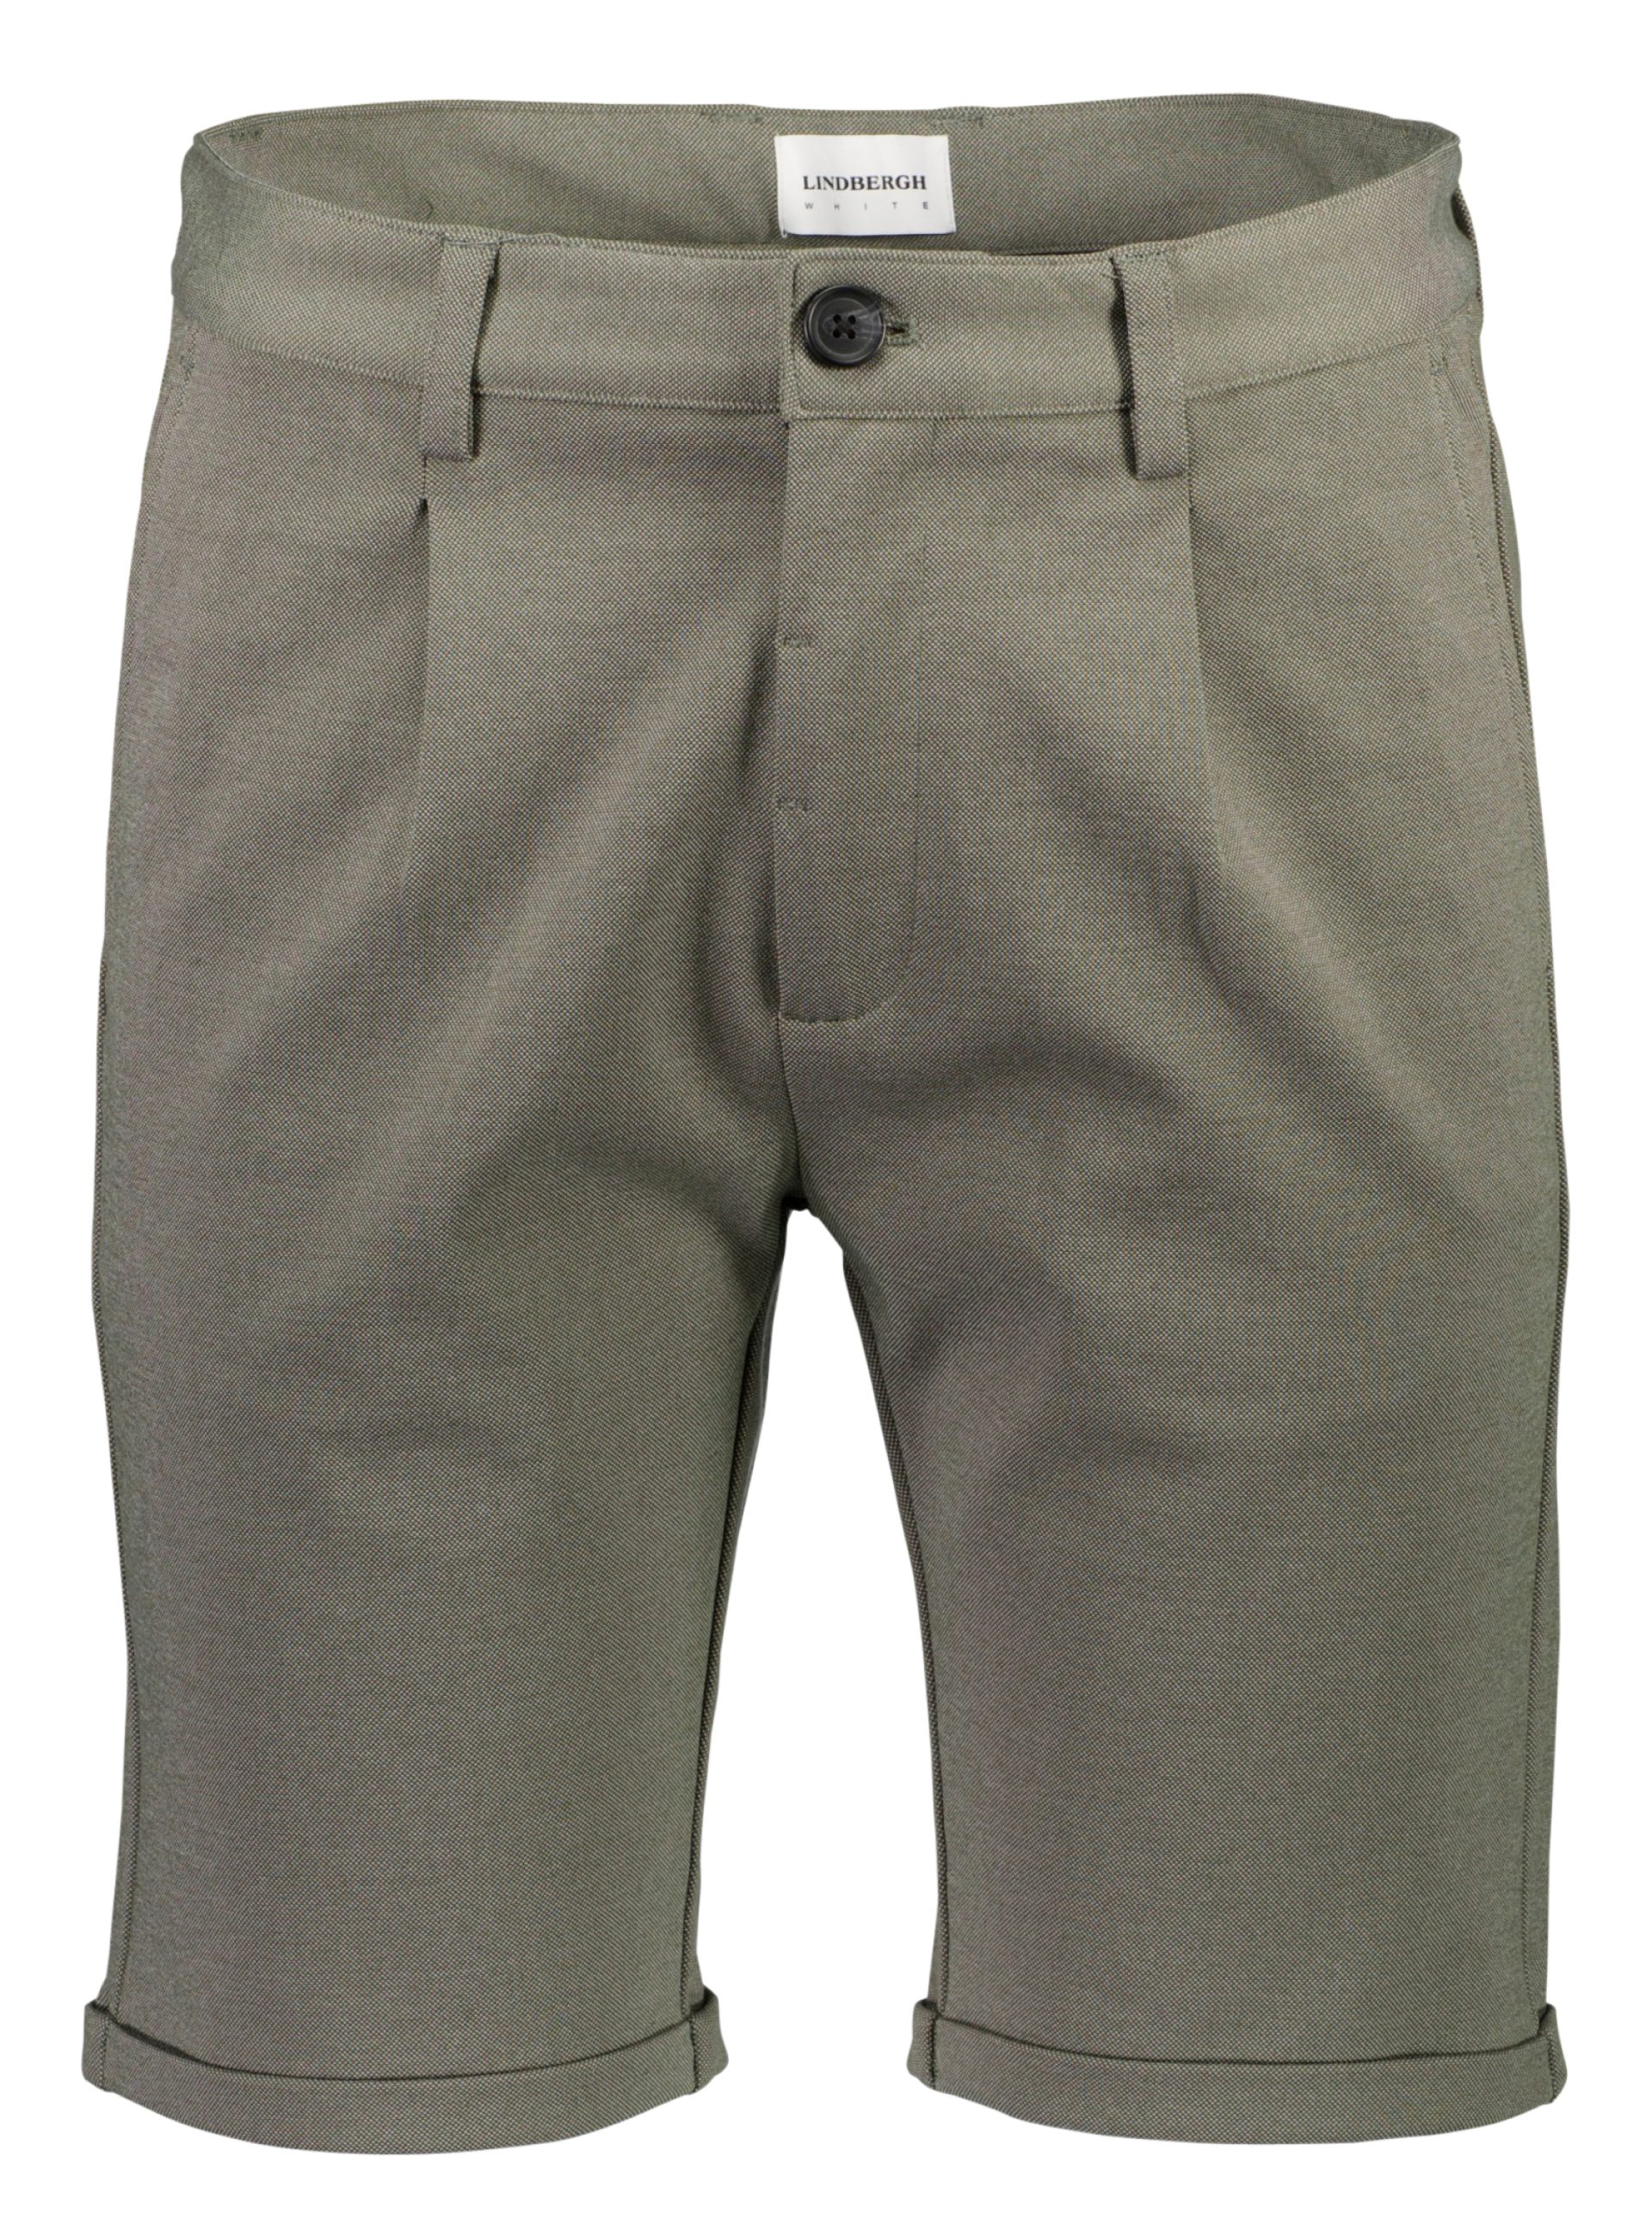 Lindbergh Pantalon korte broek groen / mid army mix